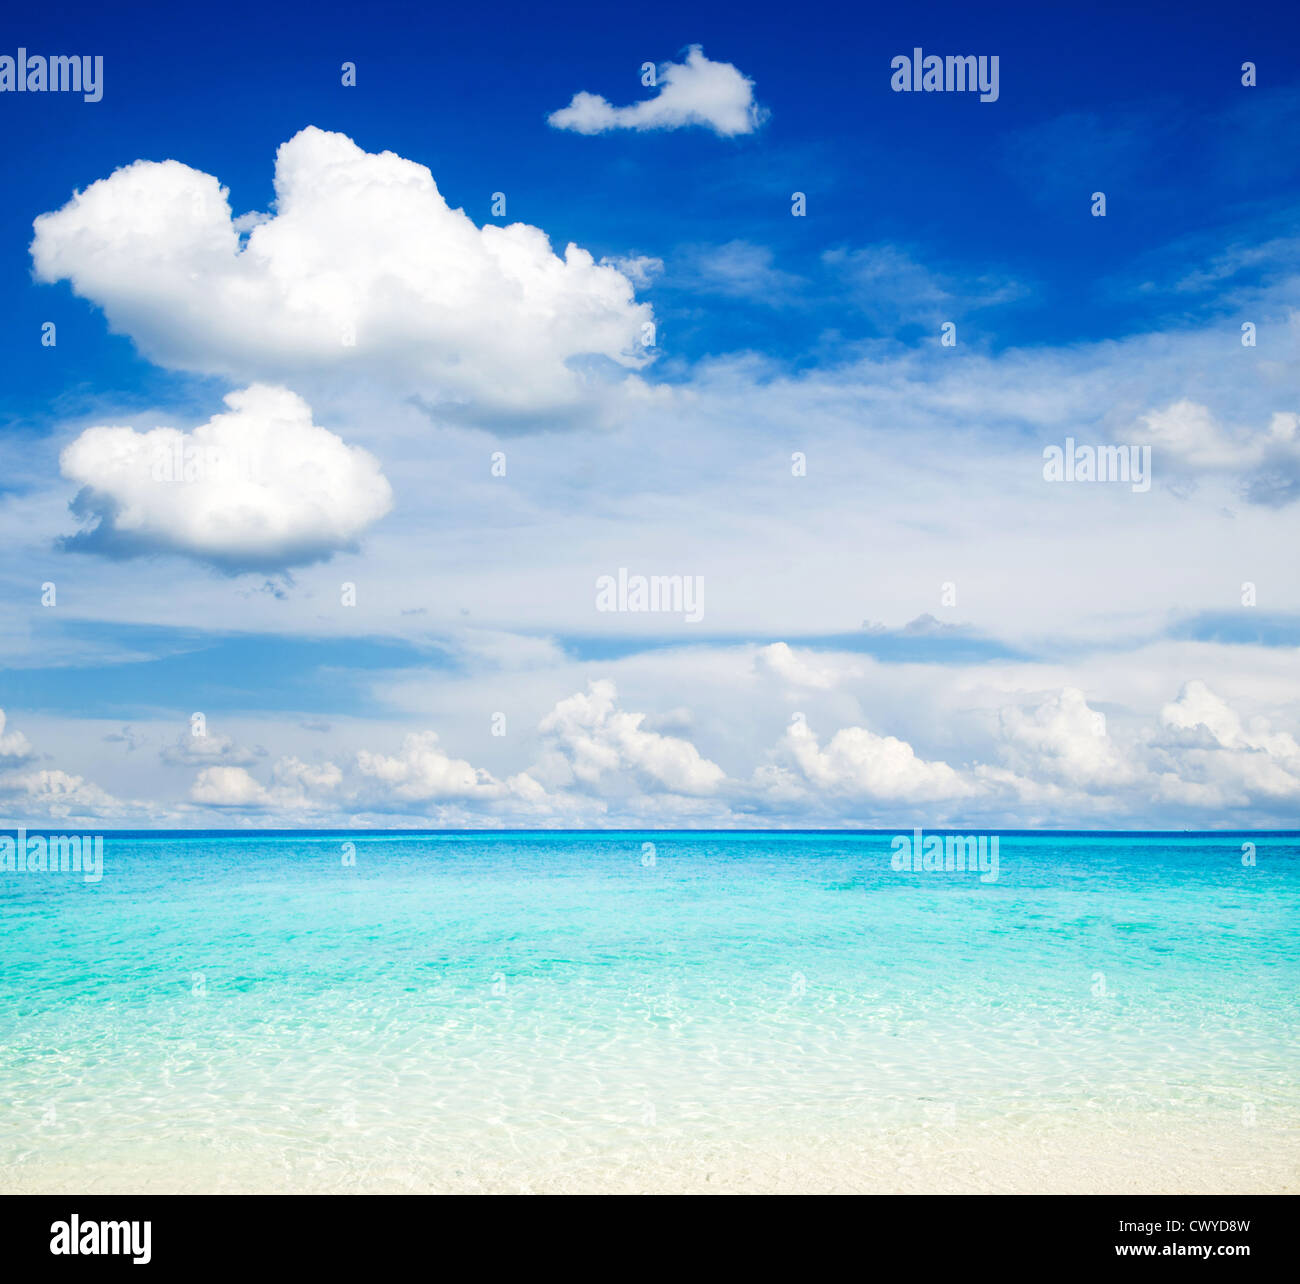 beautiful beach and tropical sea Stock Photo